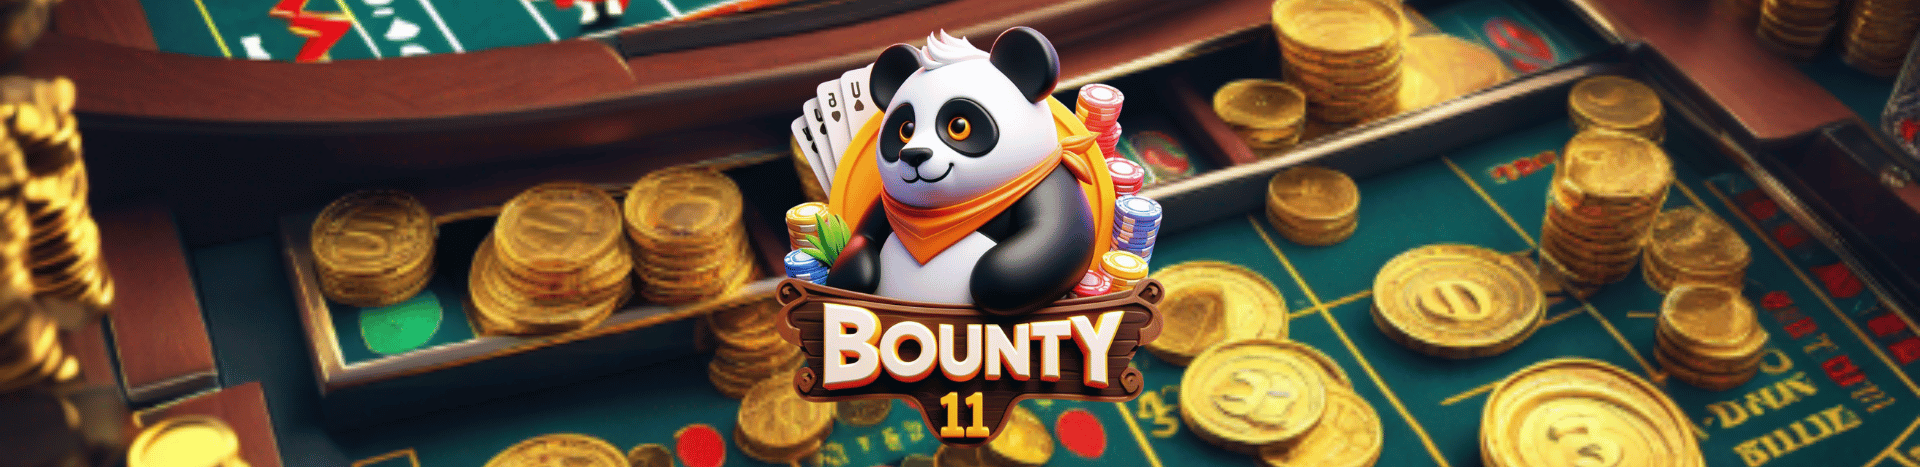 bounty11 home banner